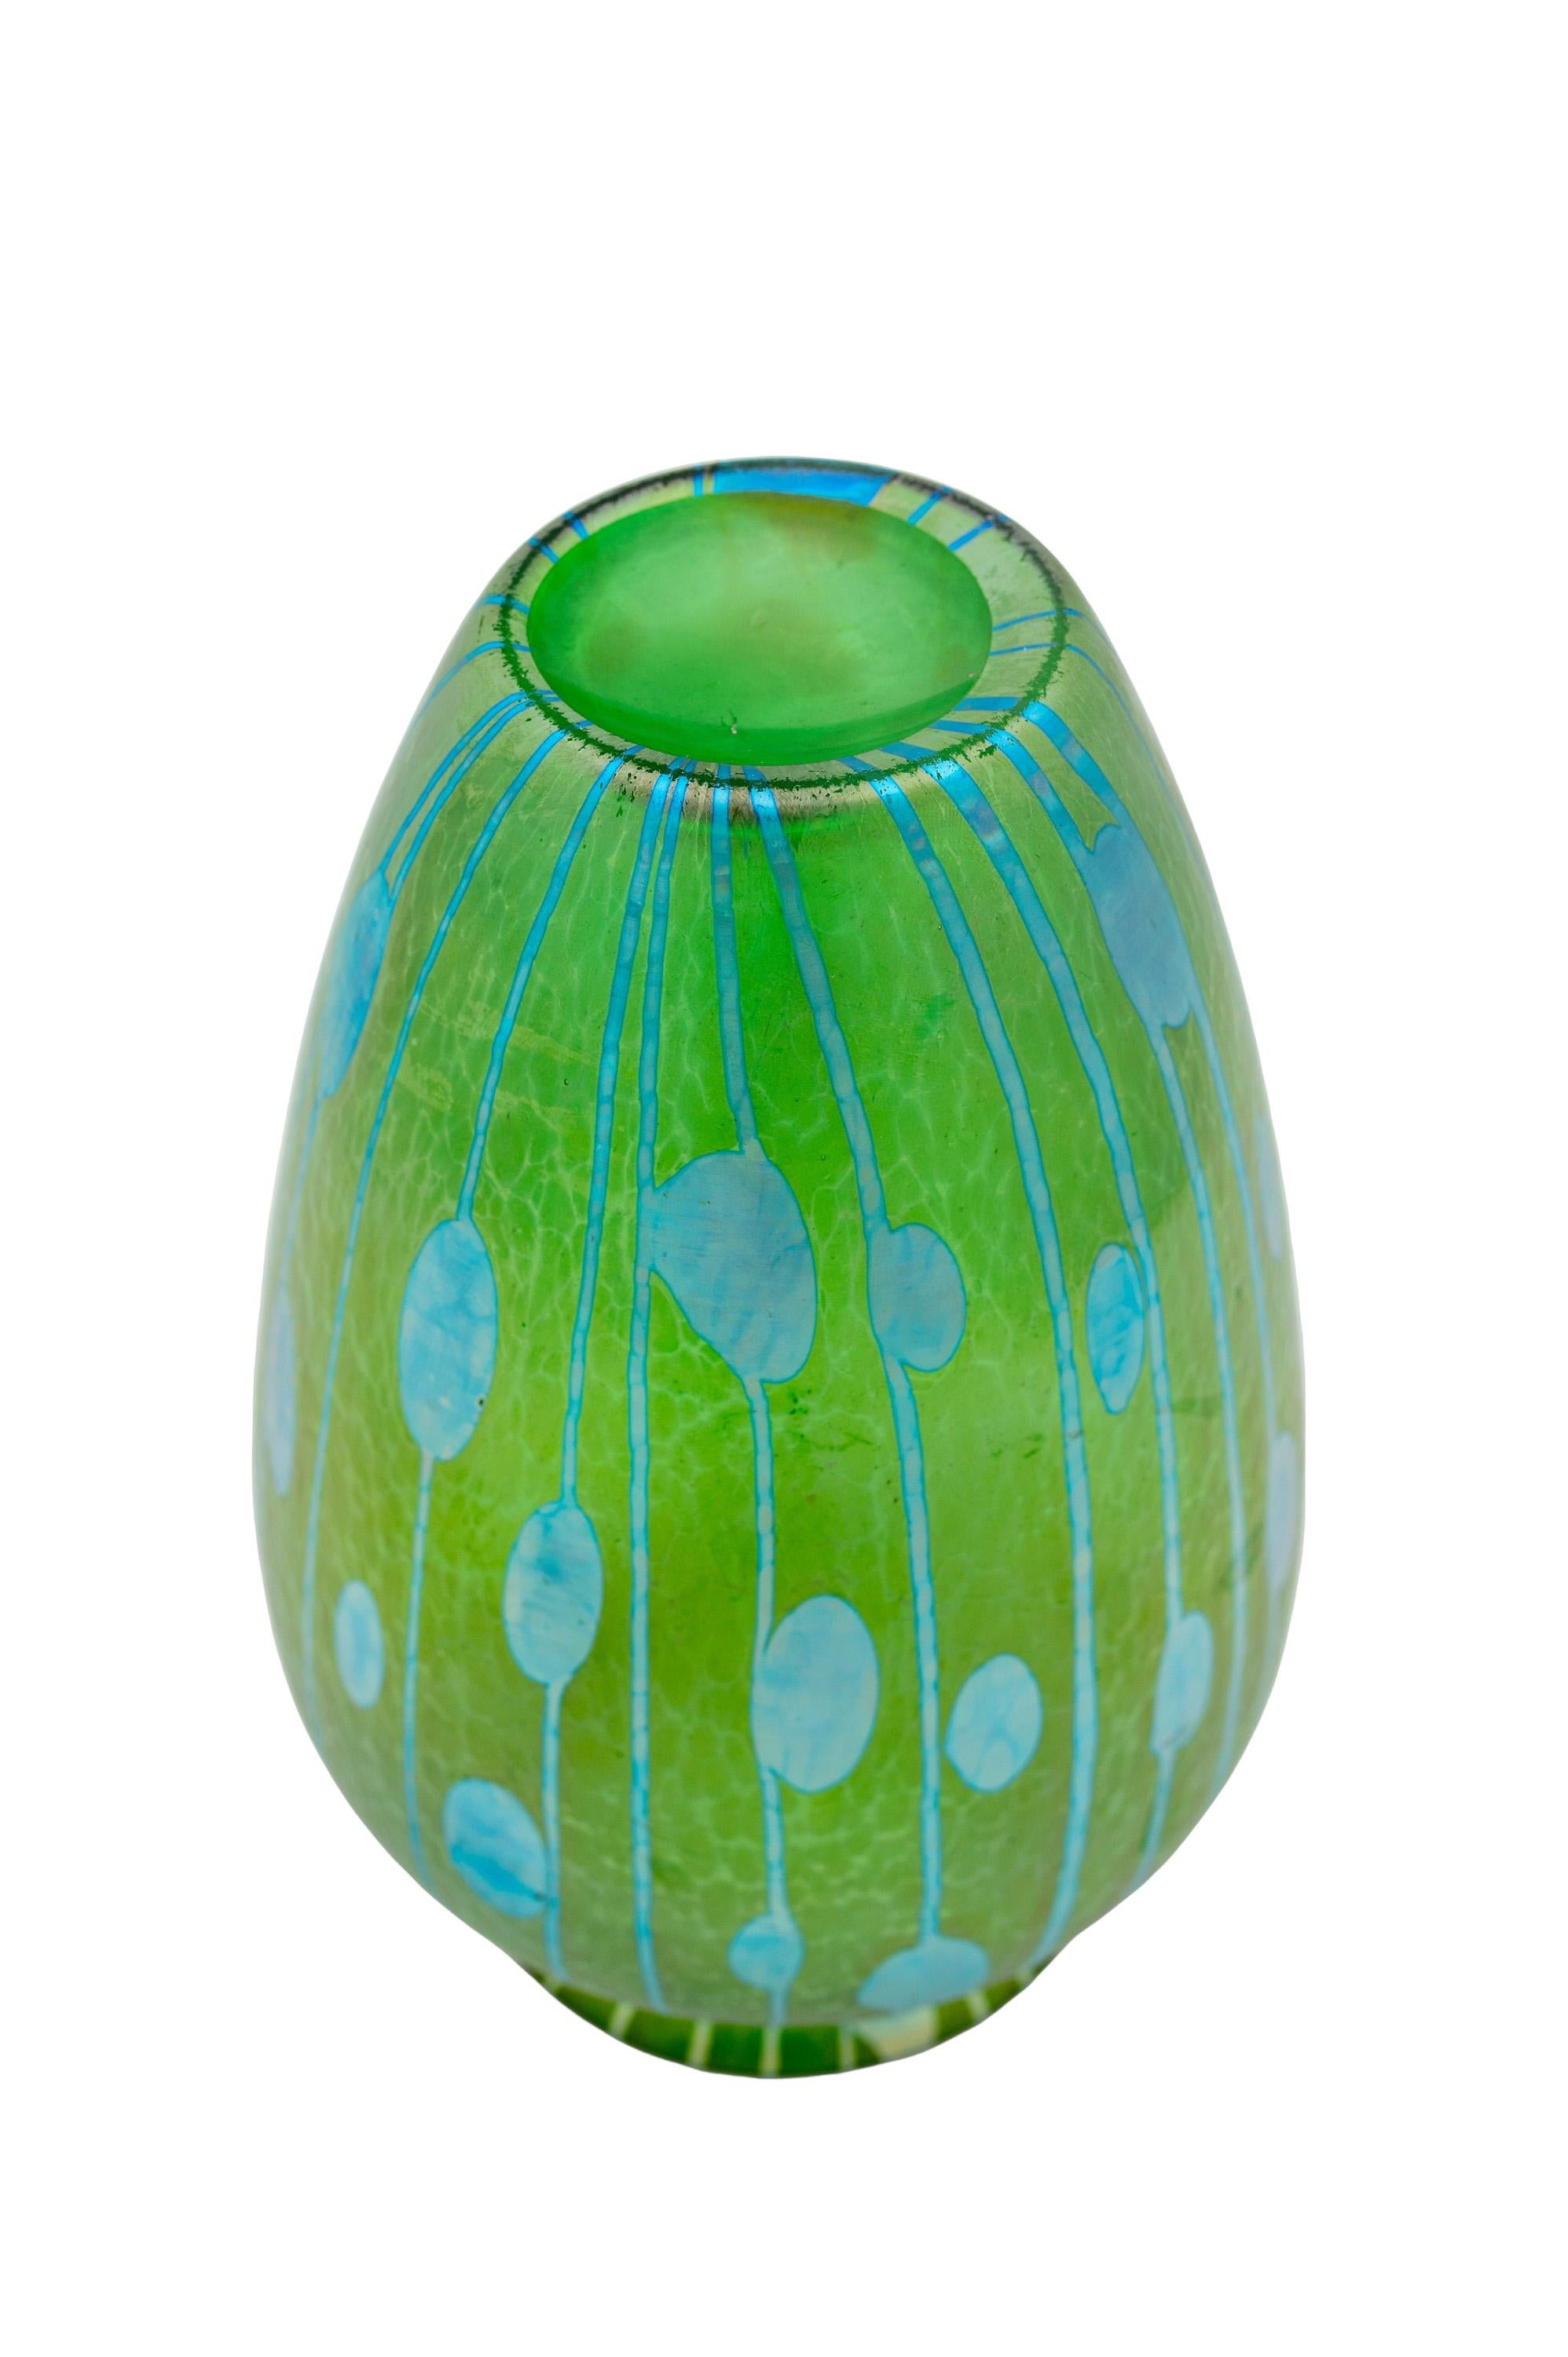 Austrian Bohemian Glass Vase Loetz Koloman Moser circa 1900 Blue Green For Sale